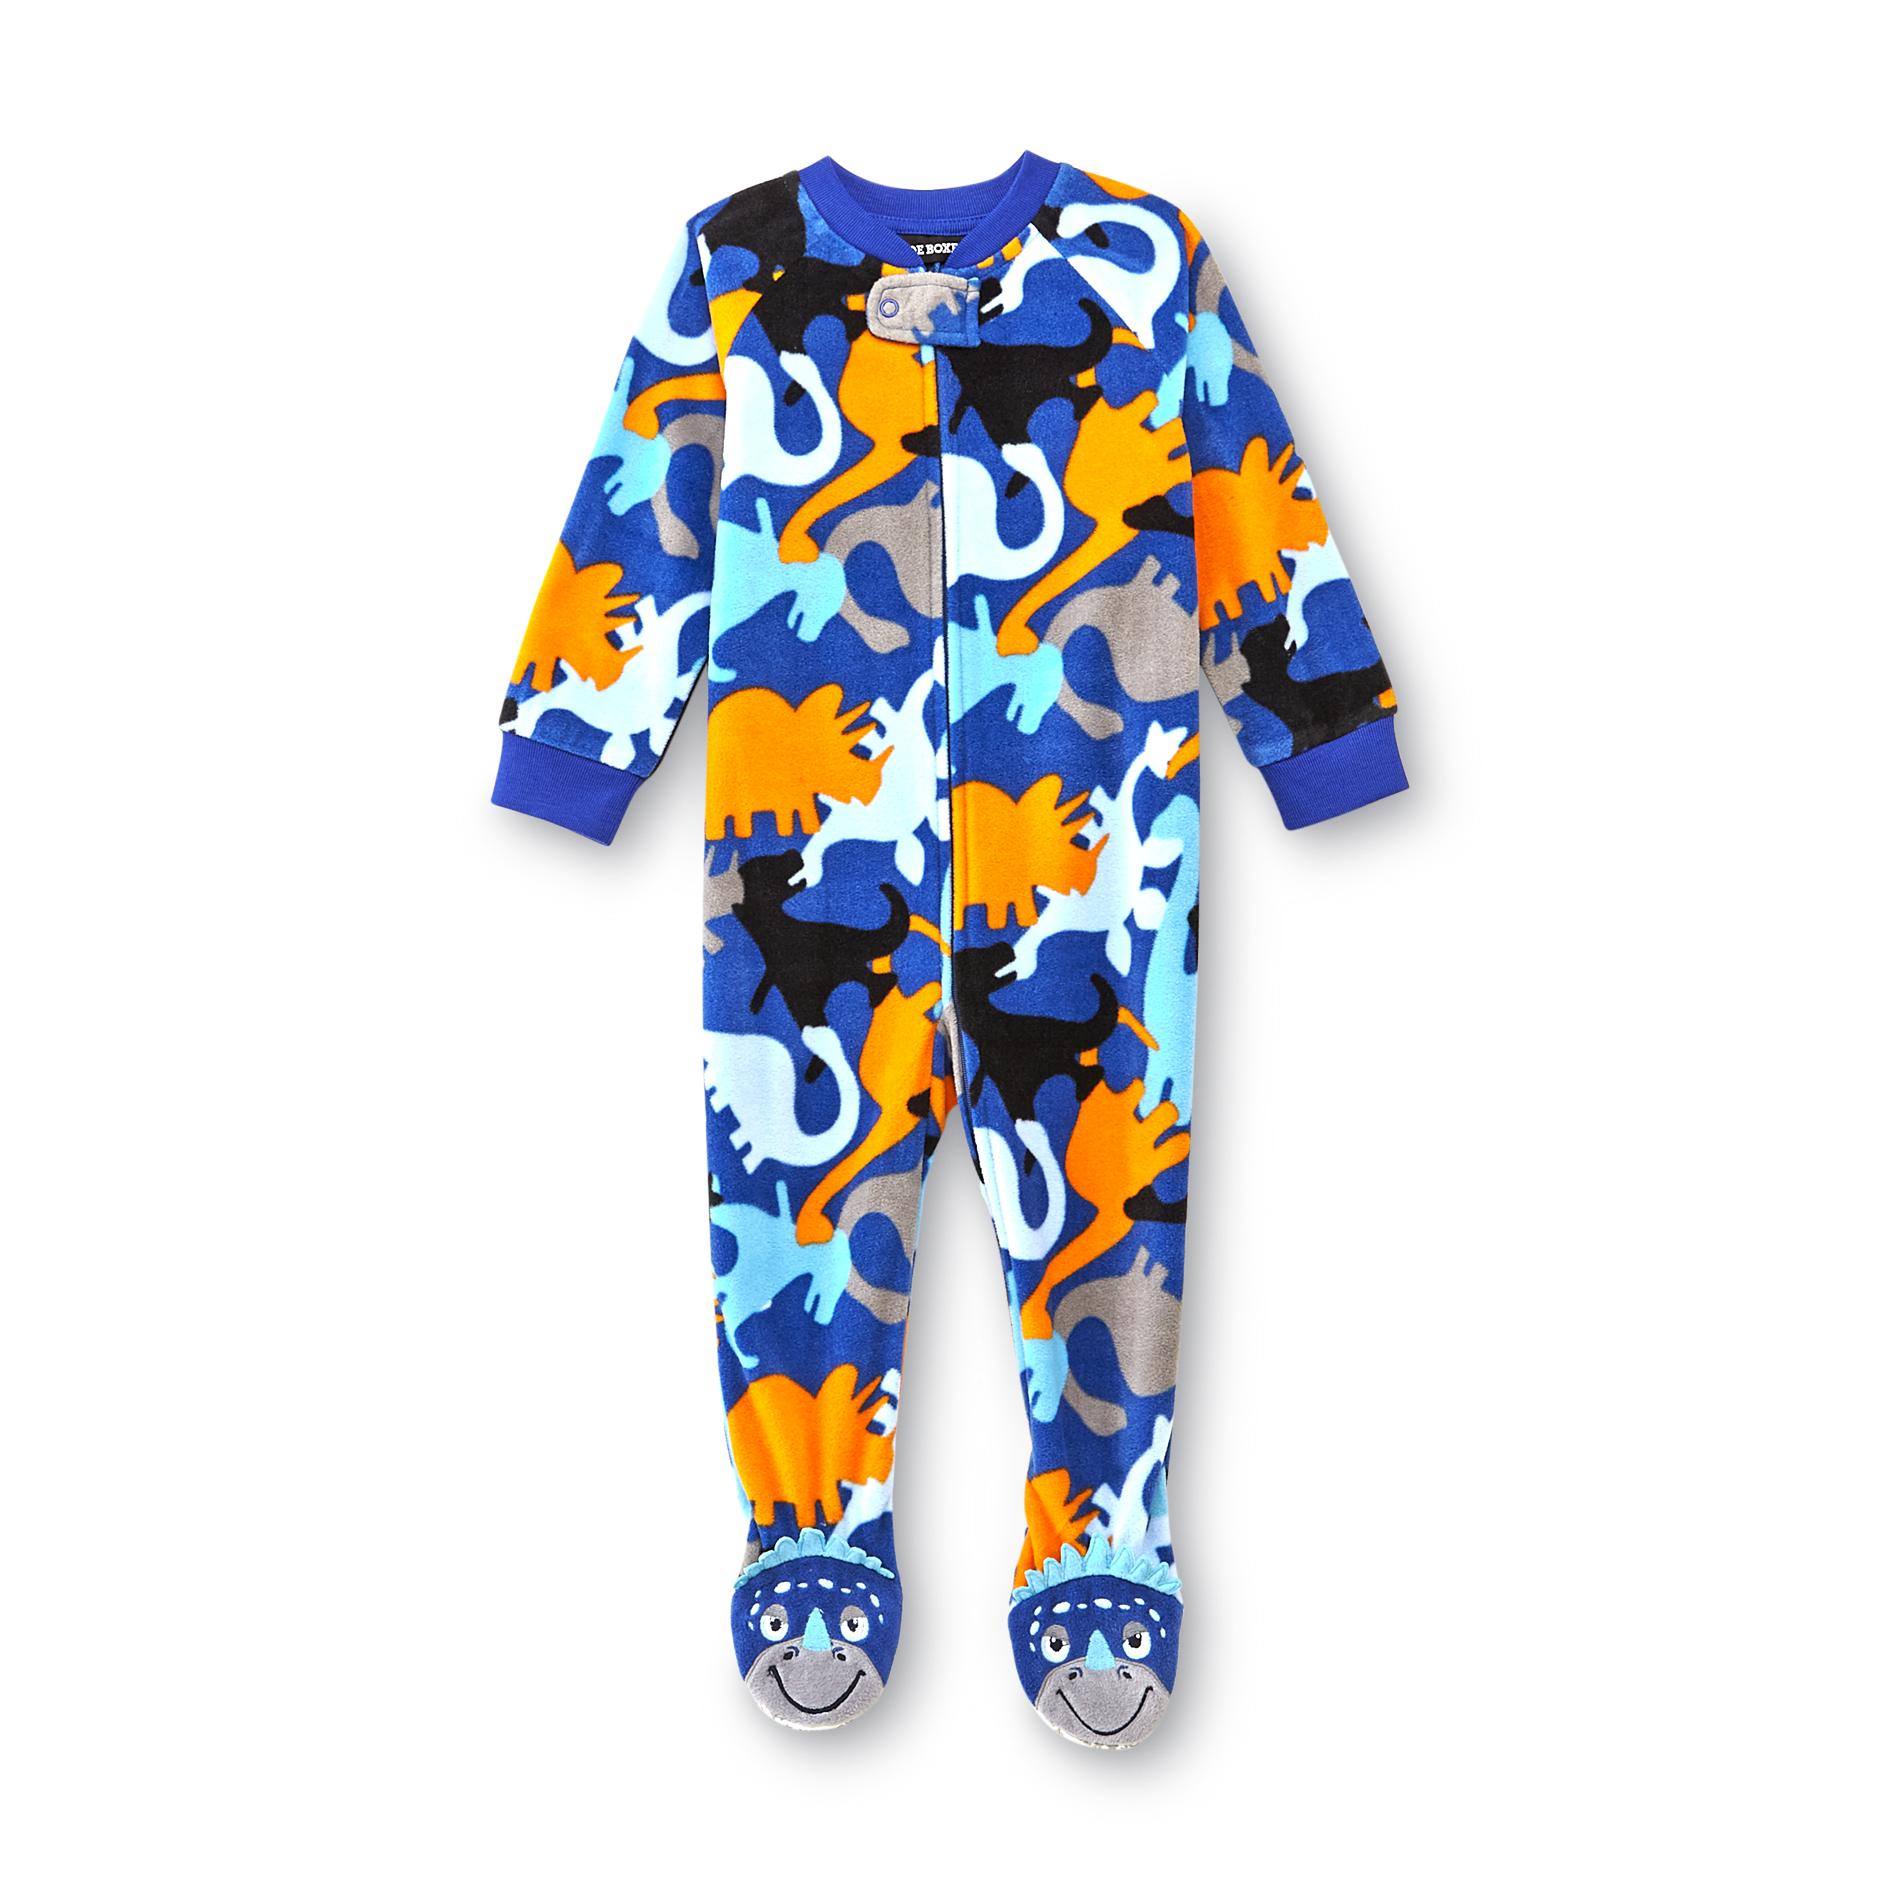 Joe Boxer Infant & Toddler Boy's Fleece Footed Sleeper Pajamas - Dinosaur